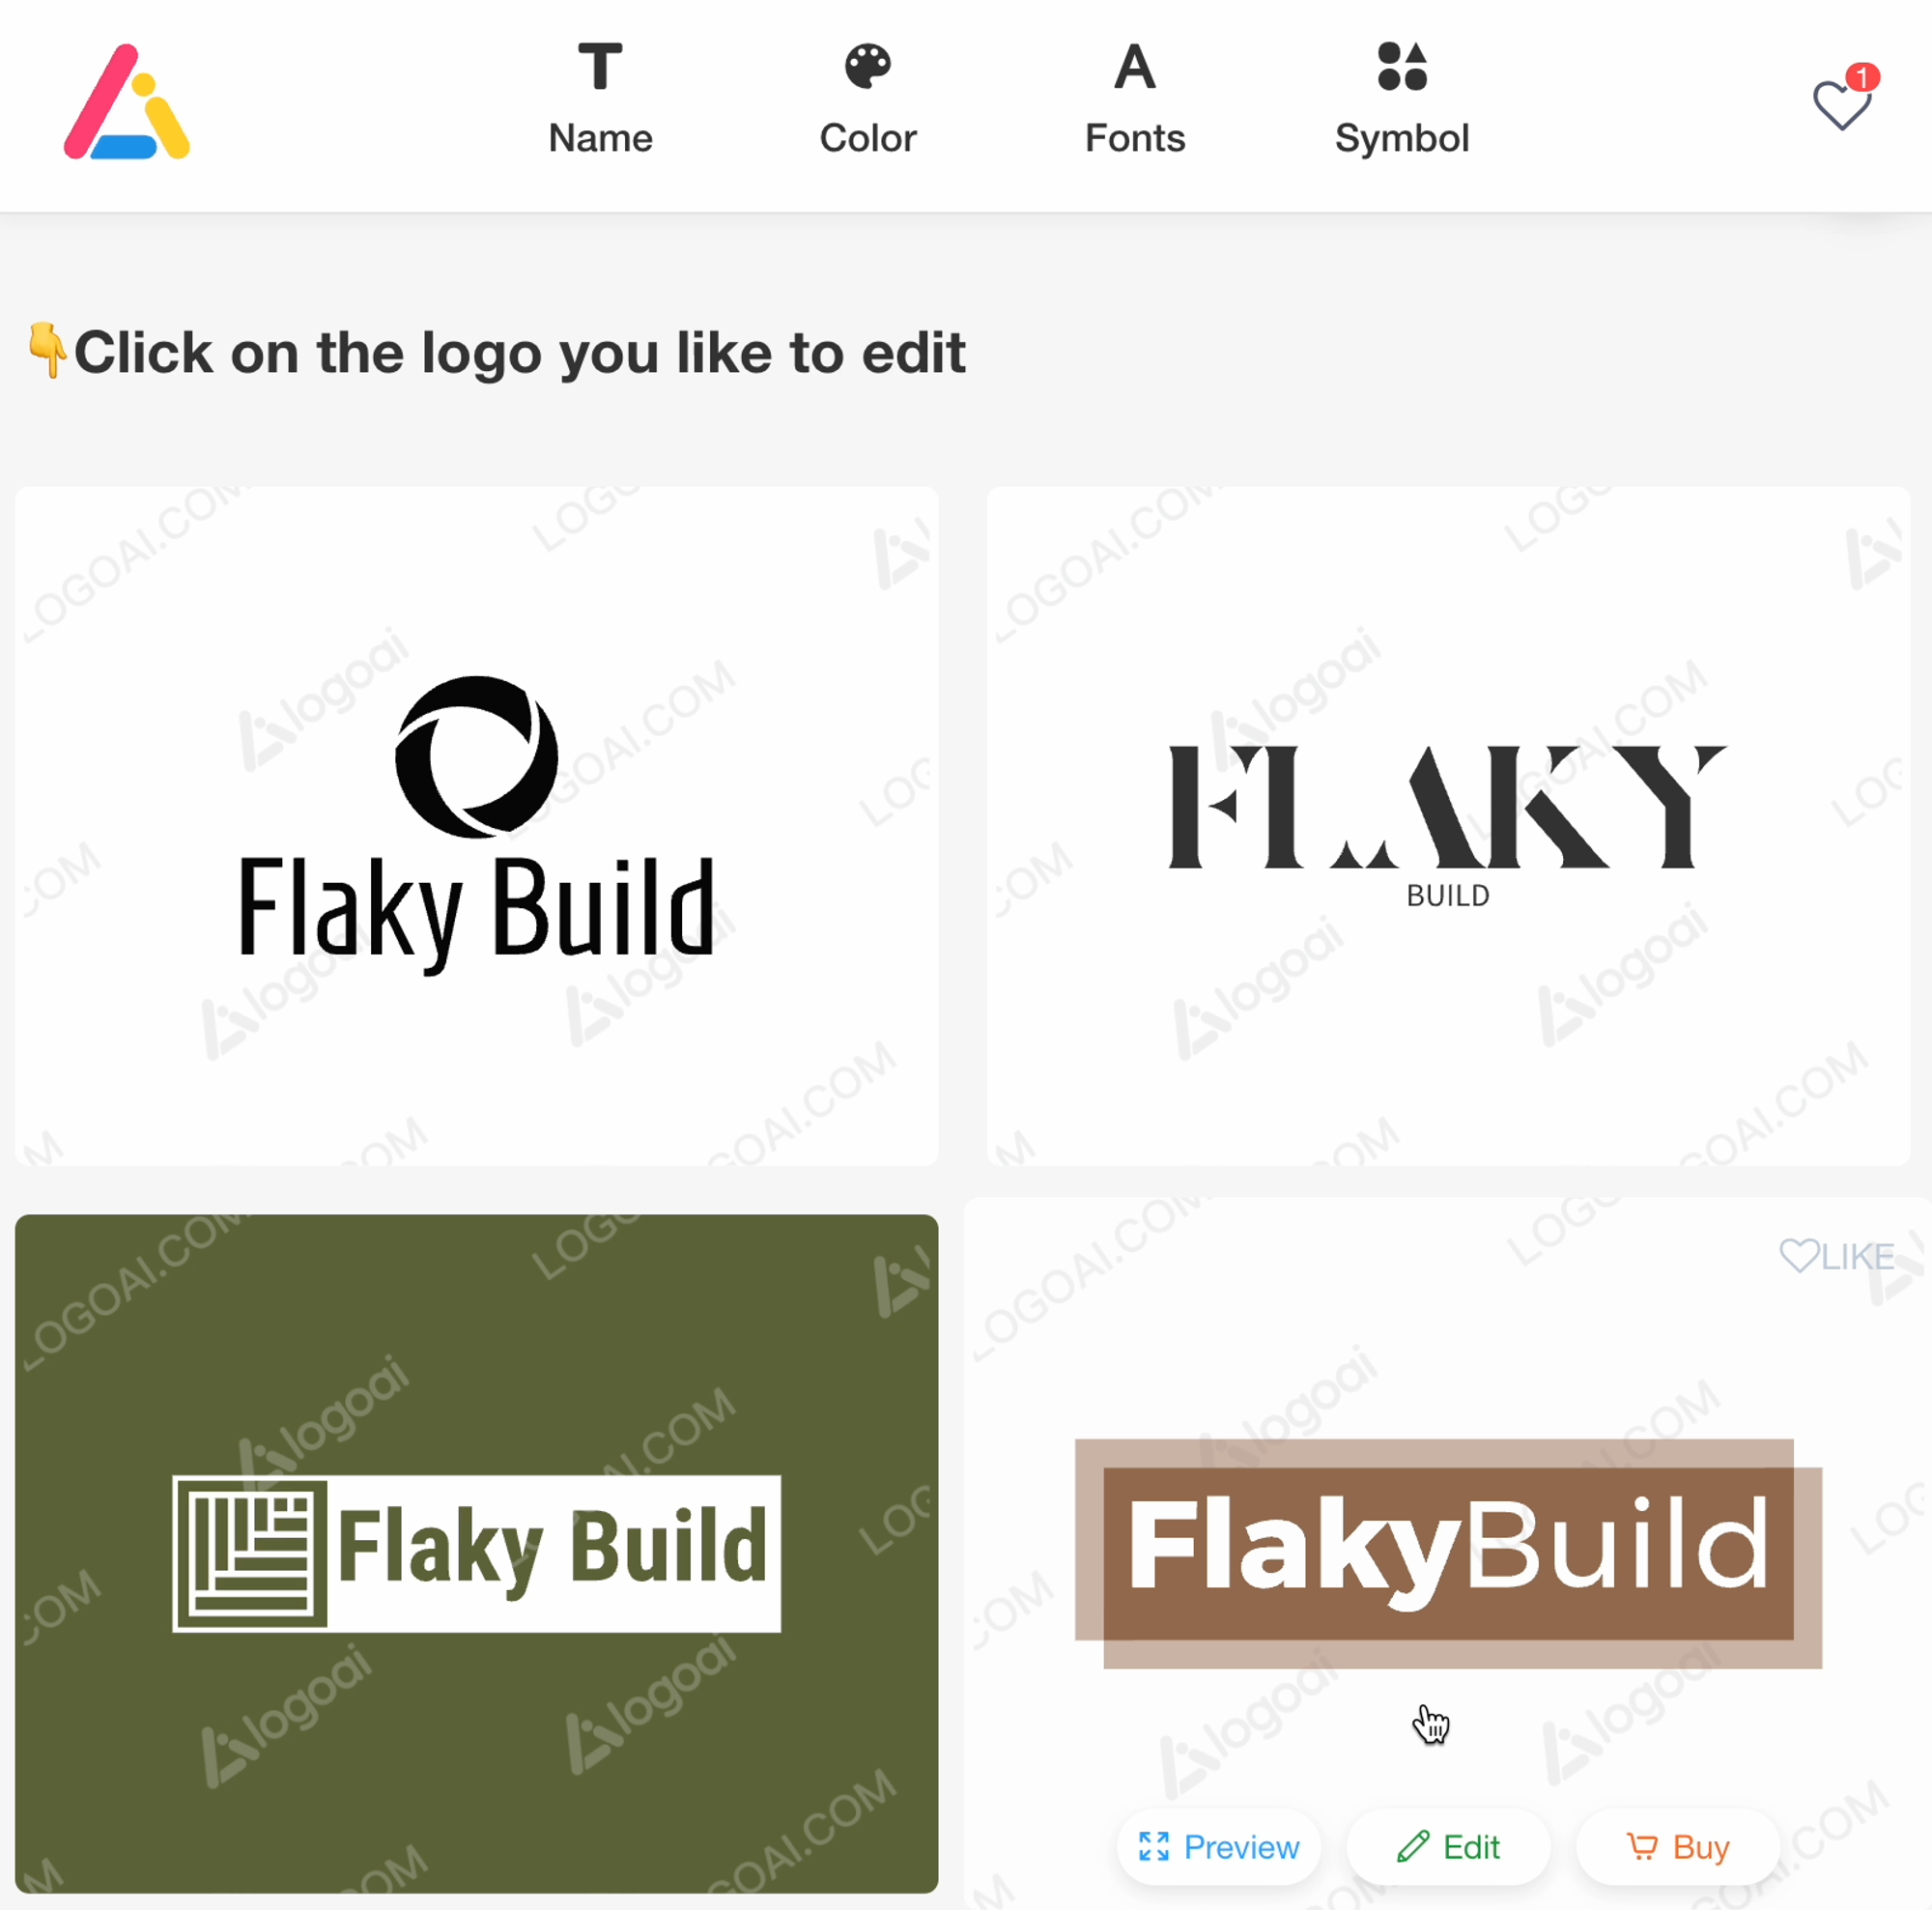 Example logos for Flaky Build in logoai.com